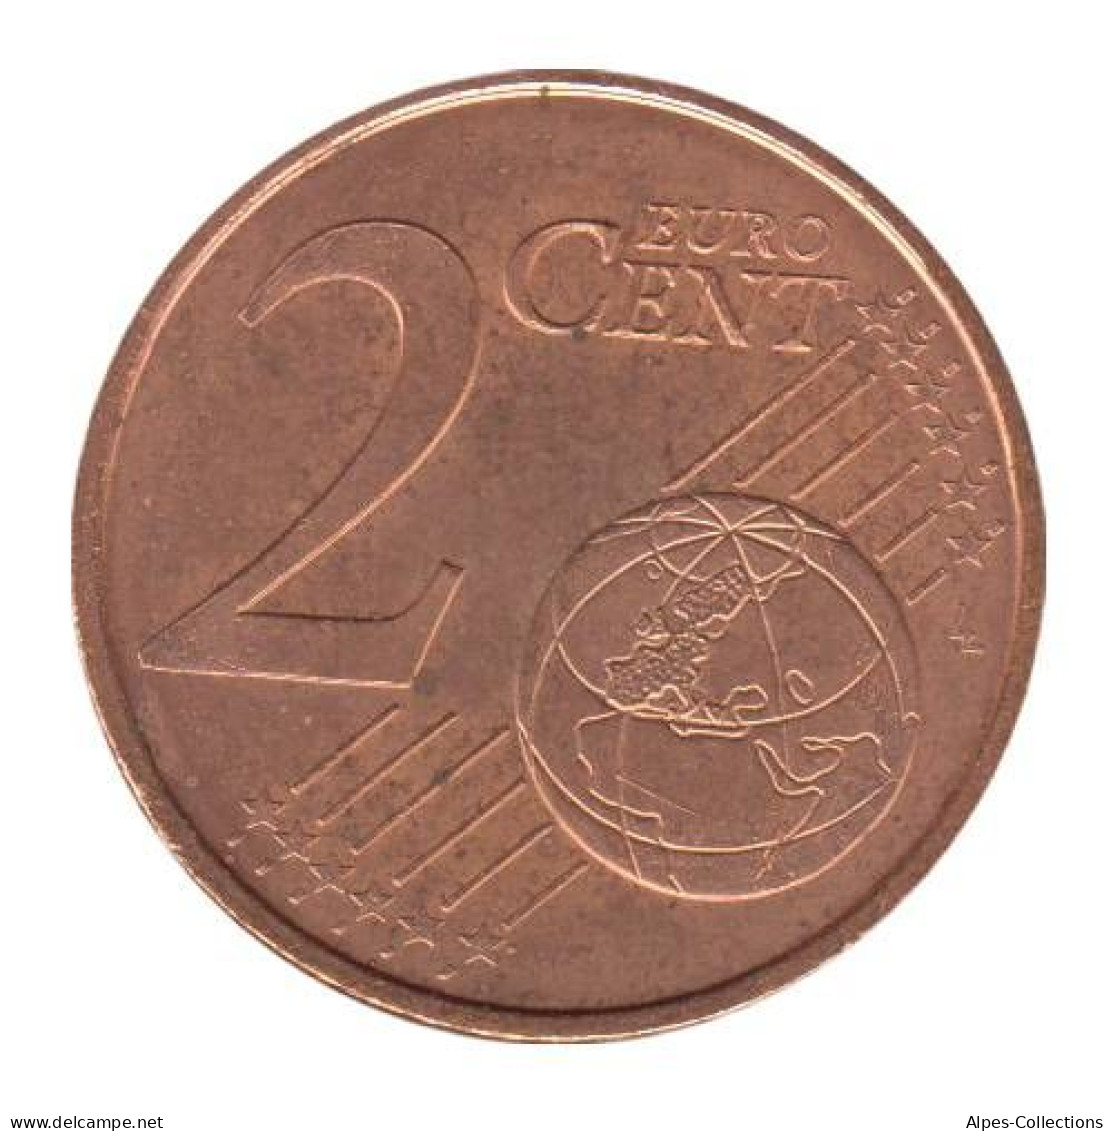 FR00204.1 - FRANCE - 2 Cents - 2004 - Frankrijk